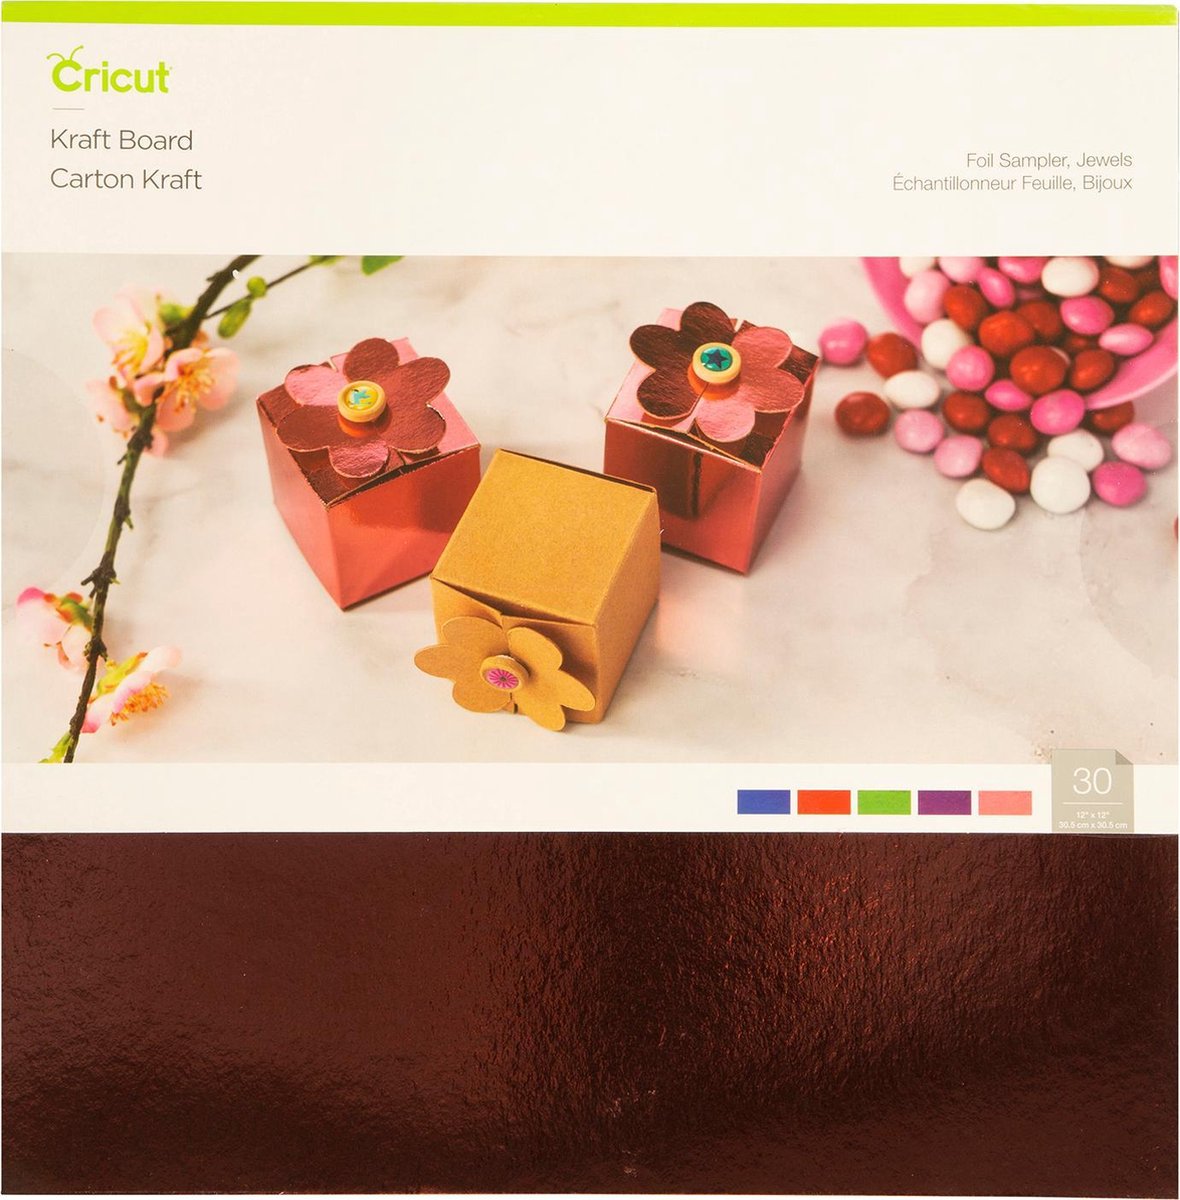 Cricut - Kraft Board Foil sampler Jewels